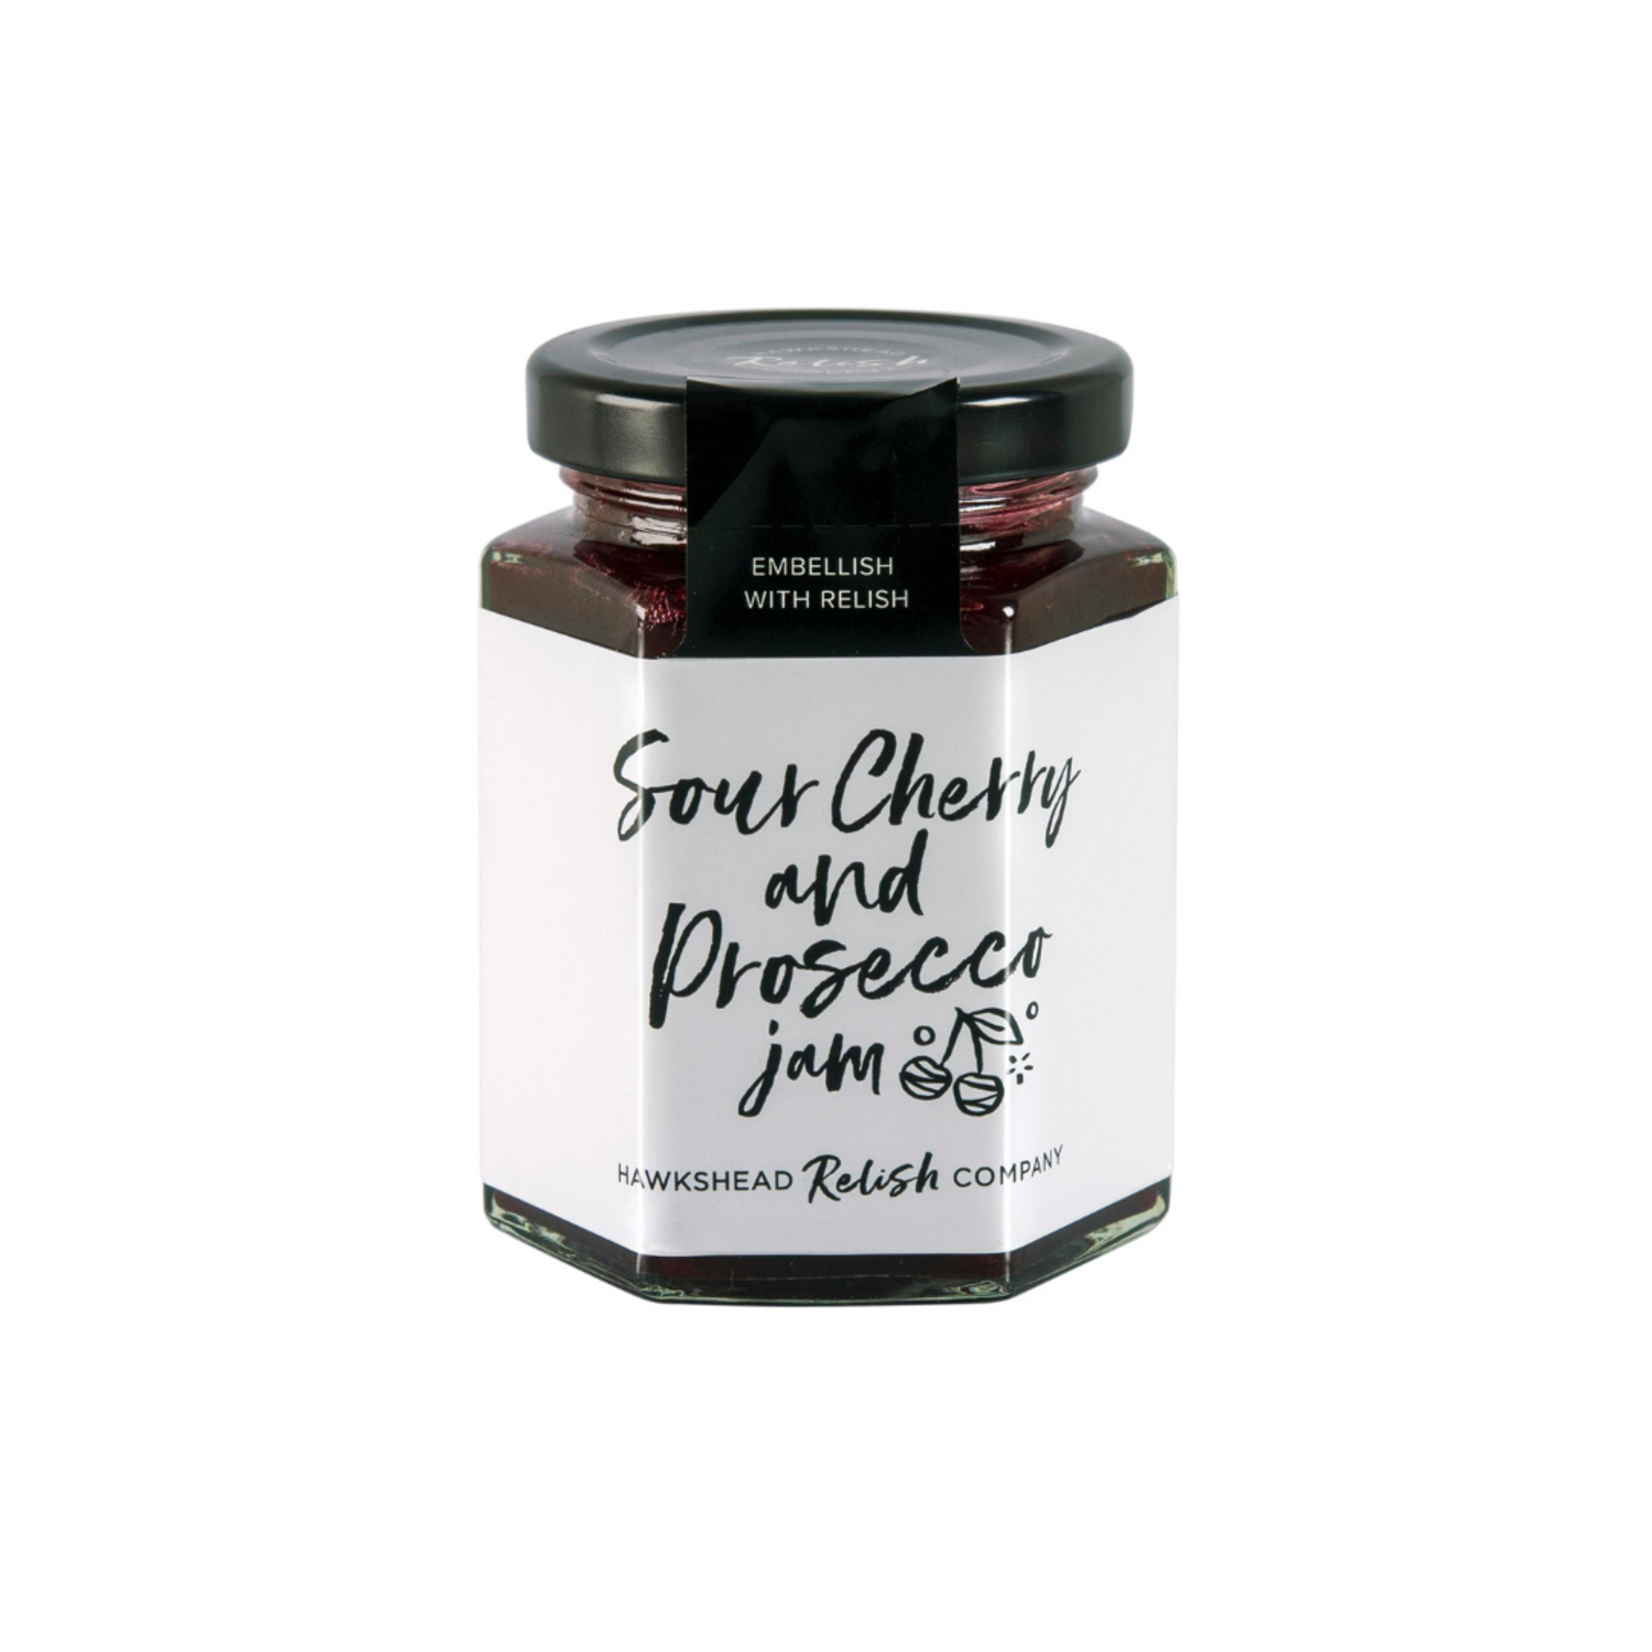 Hawkshead Relish Sour Cherry & Prosecco Jam